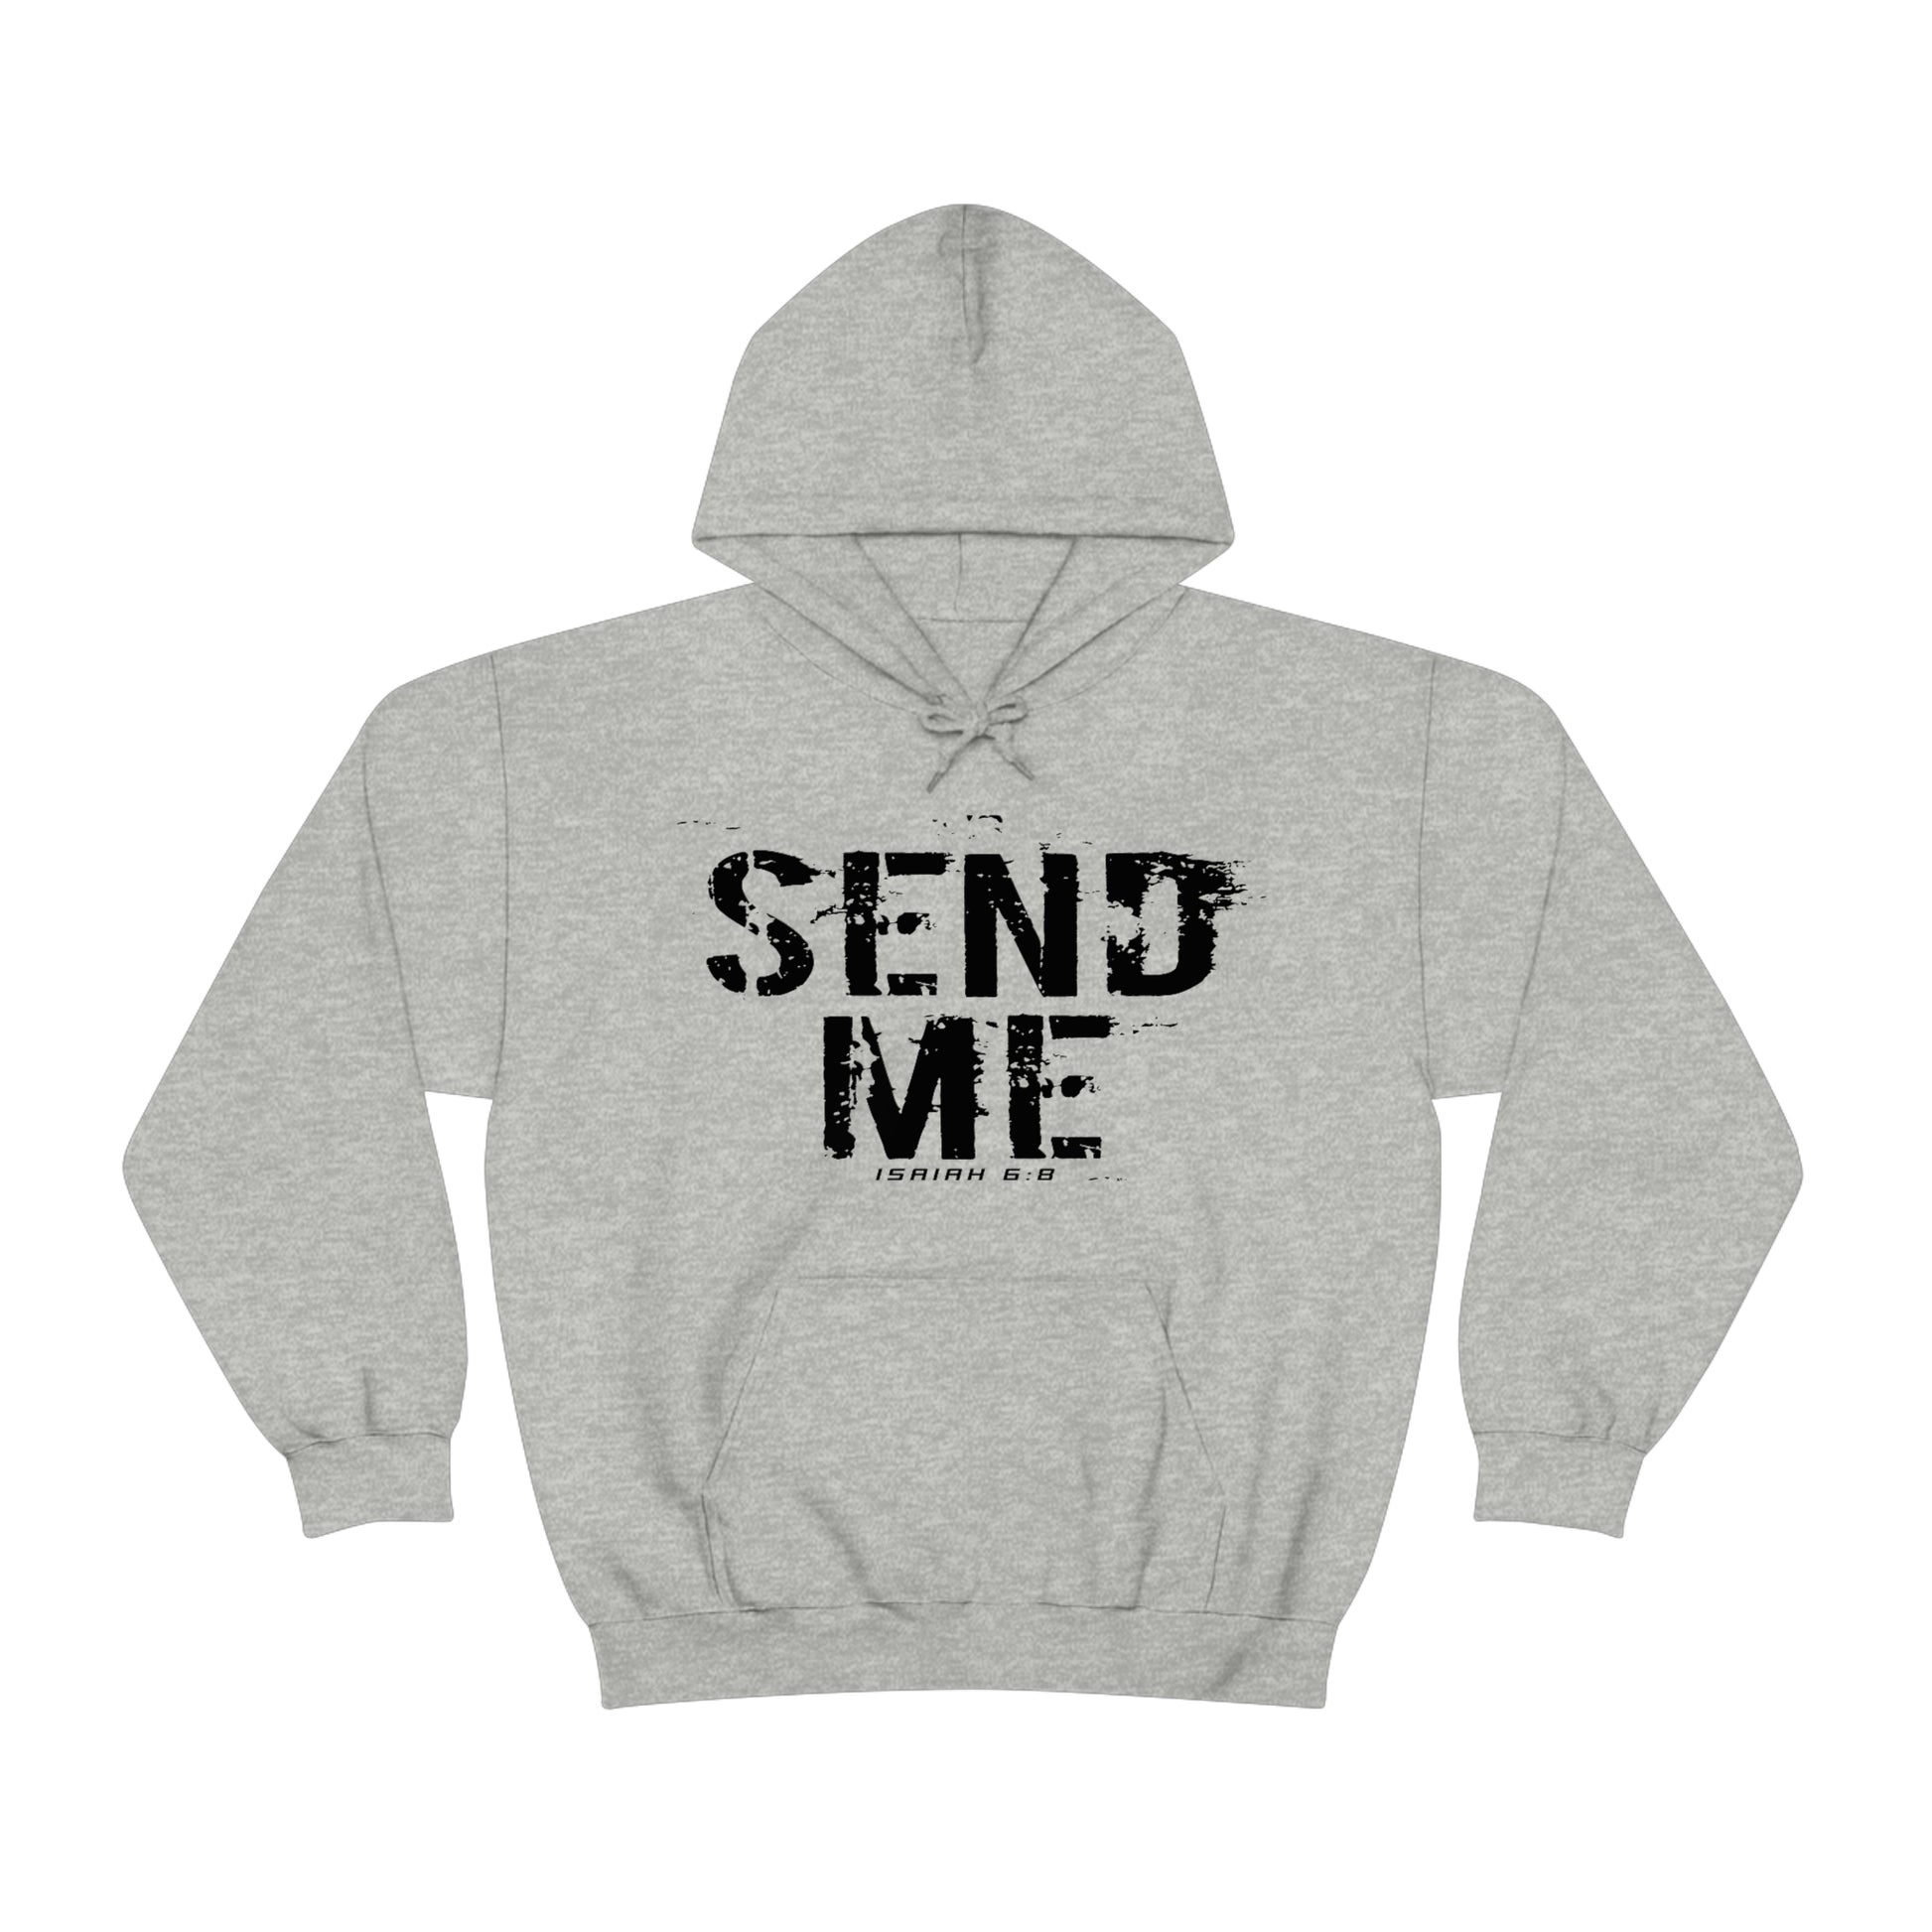 Heather Gray Gildan sweatshirt with black "Send Me" Isaiah 6:8 bible verse text printed on it by Sanctus Servo.